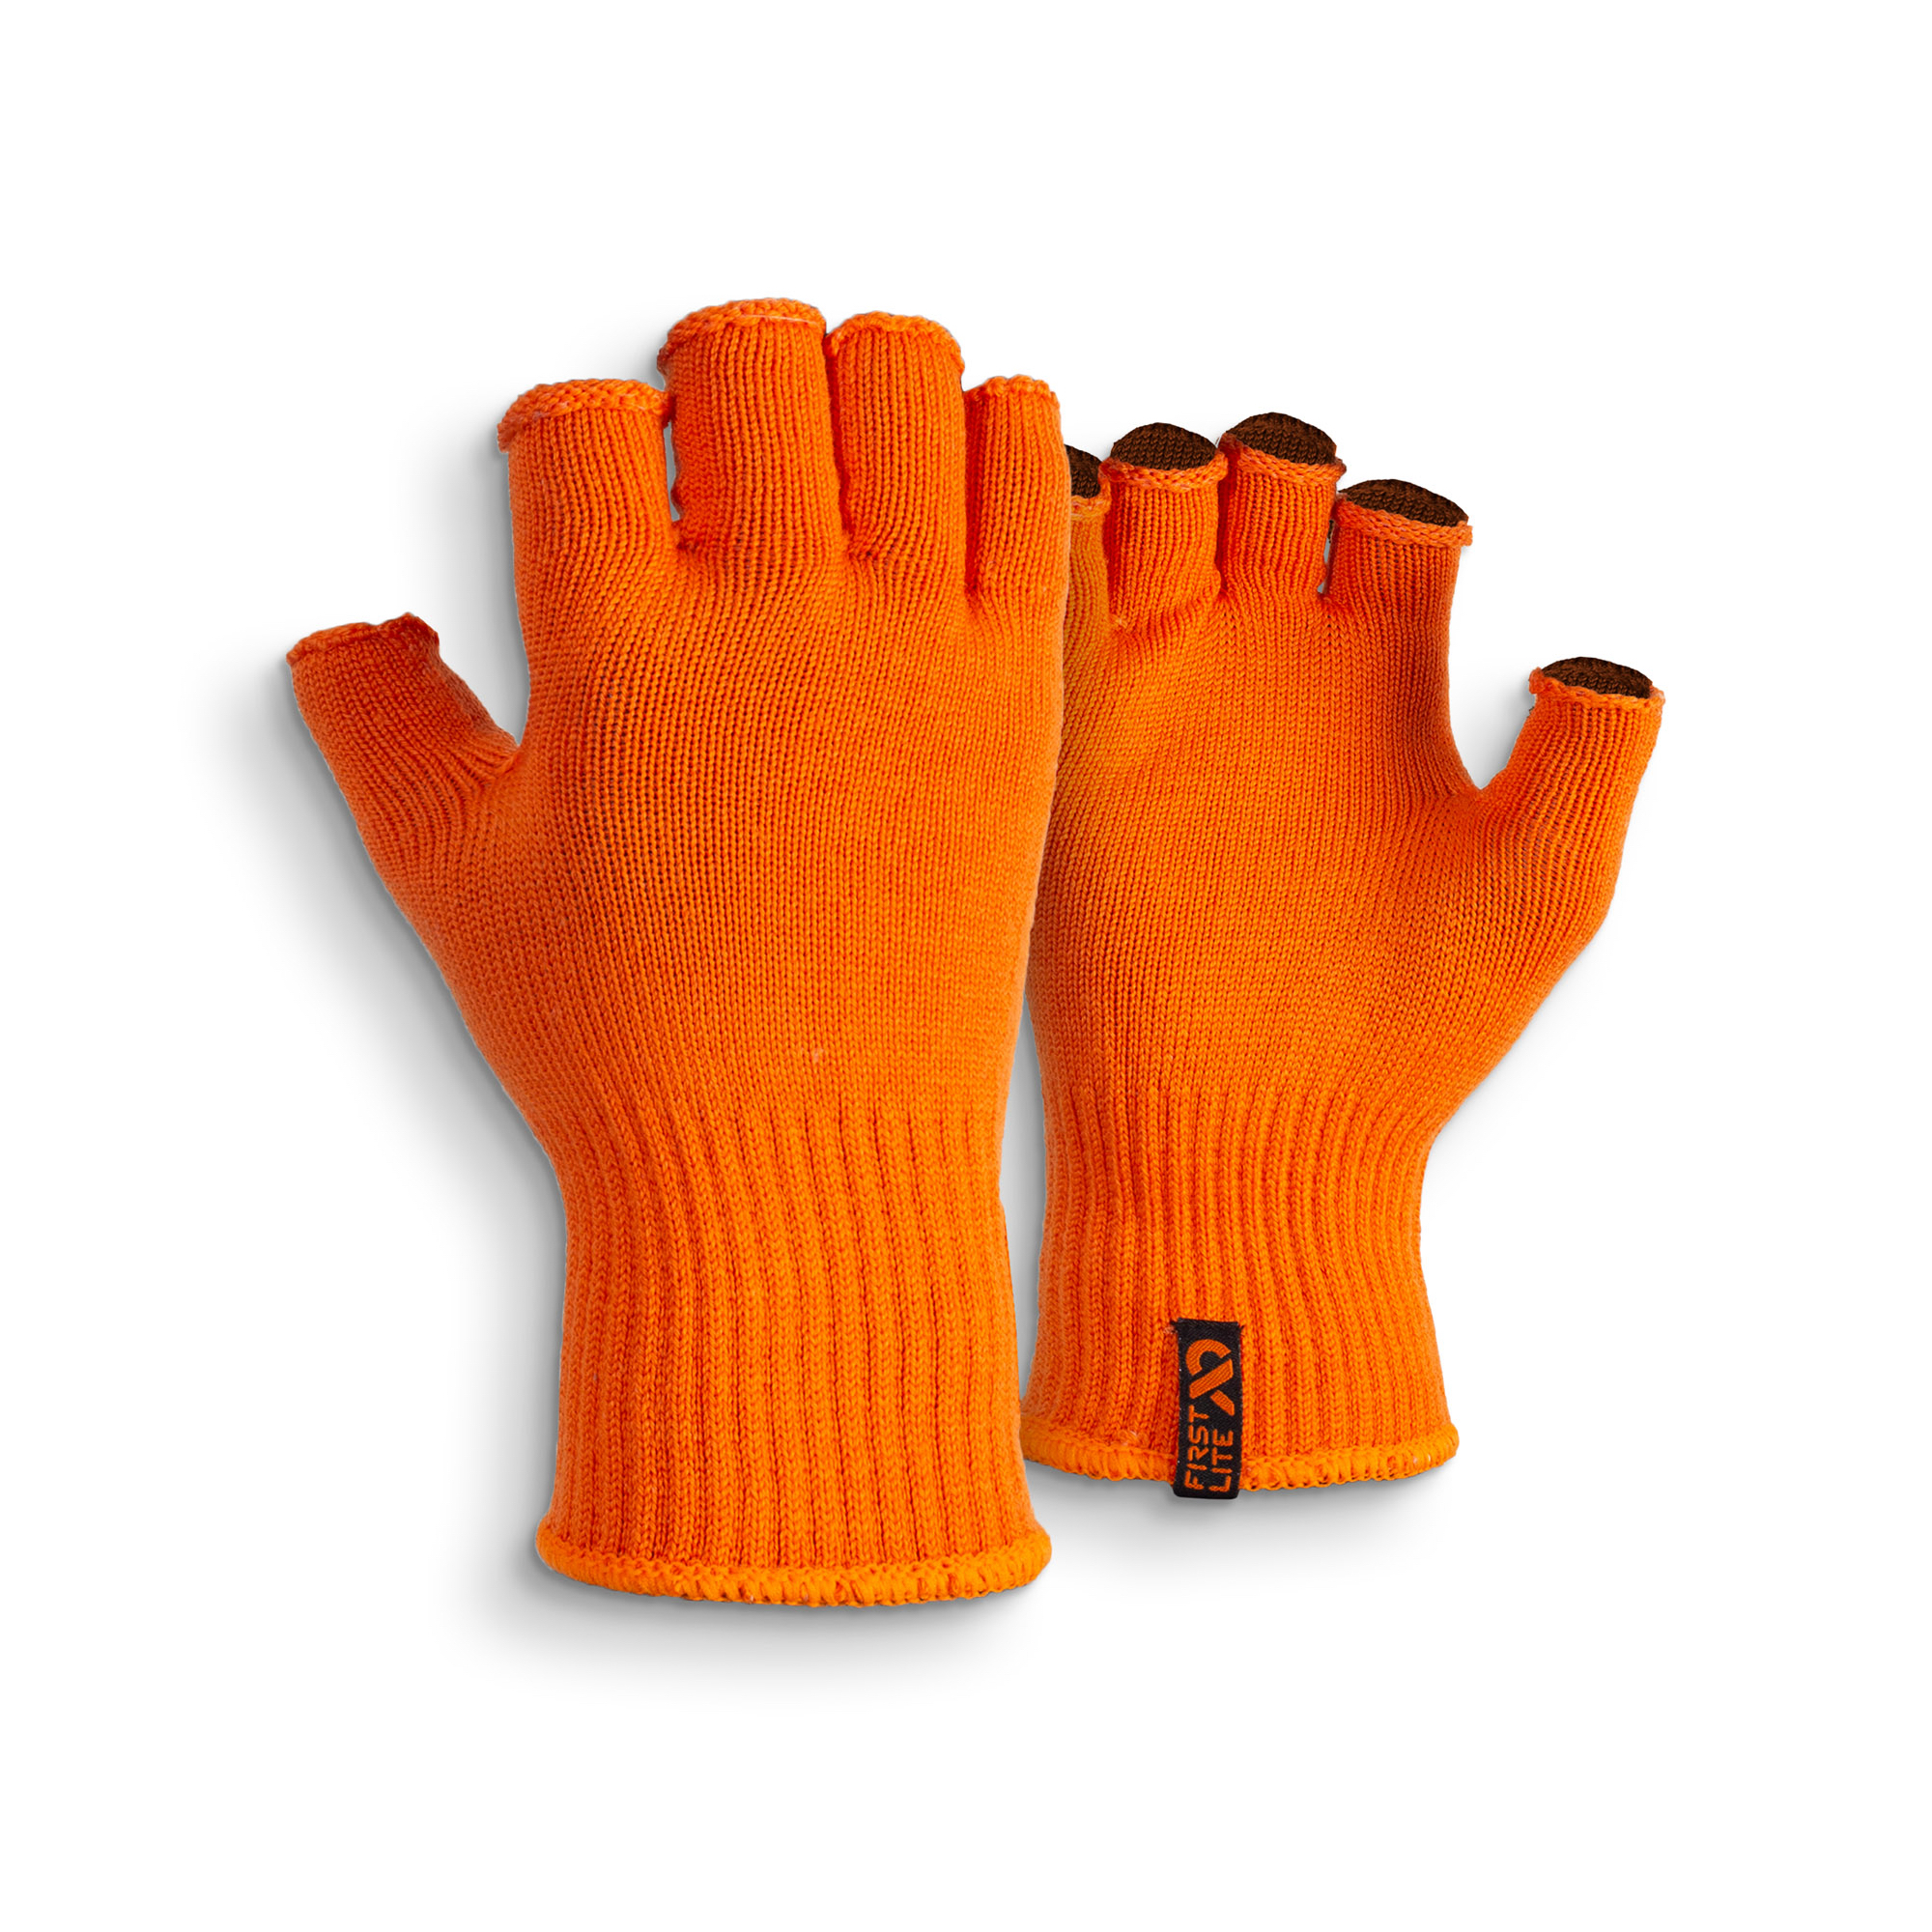 https://www.firstlite.com/on/demandware.static/-/Sites-meateater-master/default/dwe60f69db/talus-fingerless-merino-glove/talus-fingerless-merino-glove_color_hunters-orange.jpg